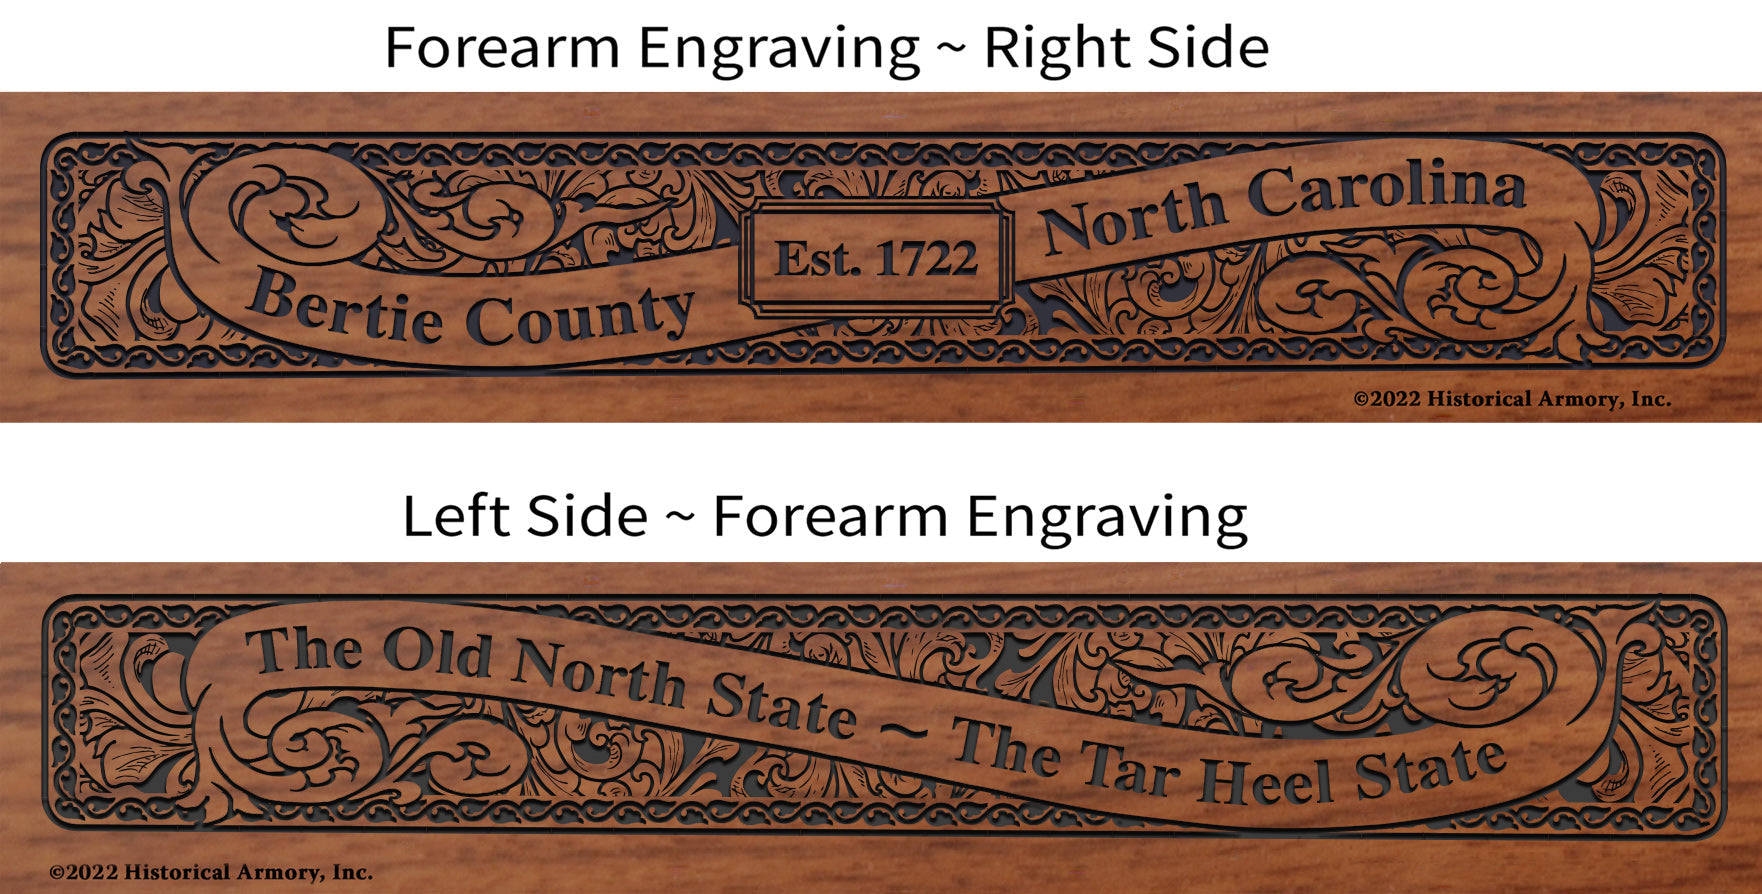 Bertie County North Carolina Engraved Rifle Forearm